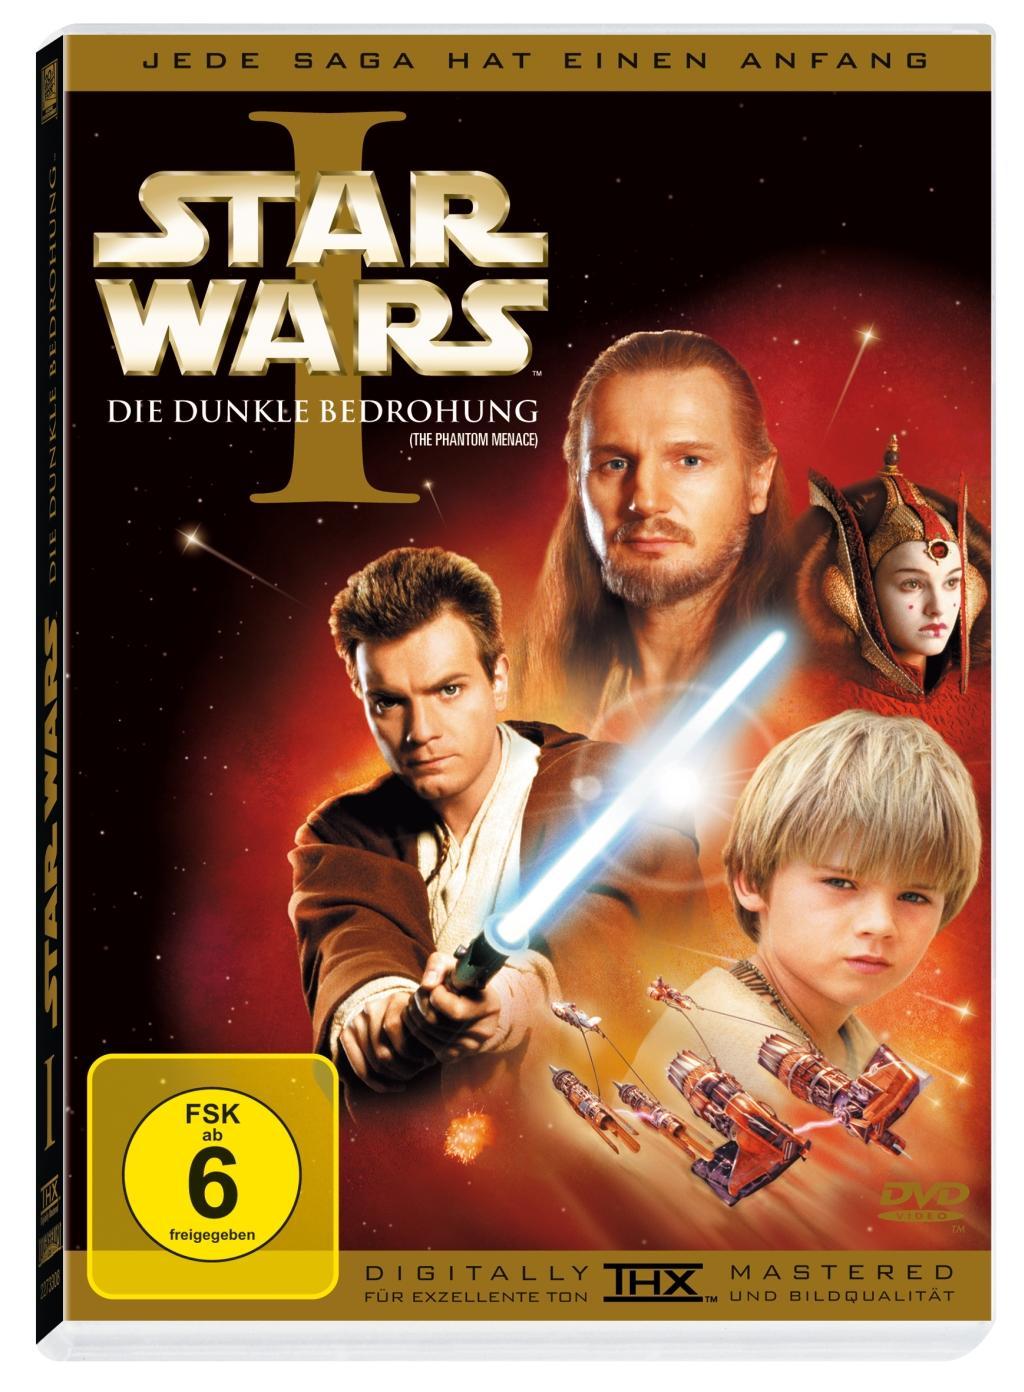 Video Star Wars Episode 1, Die dunkle Bedrohung, 1 DVD George Lucas